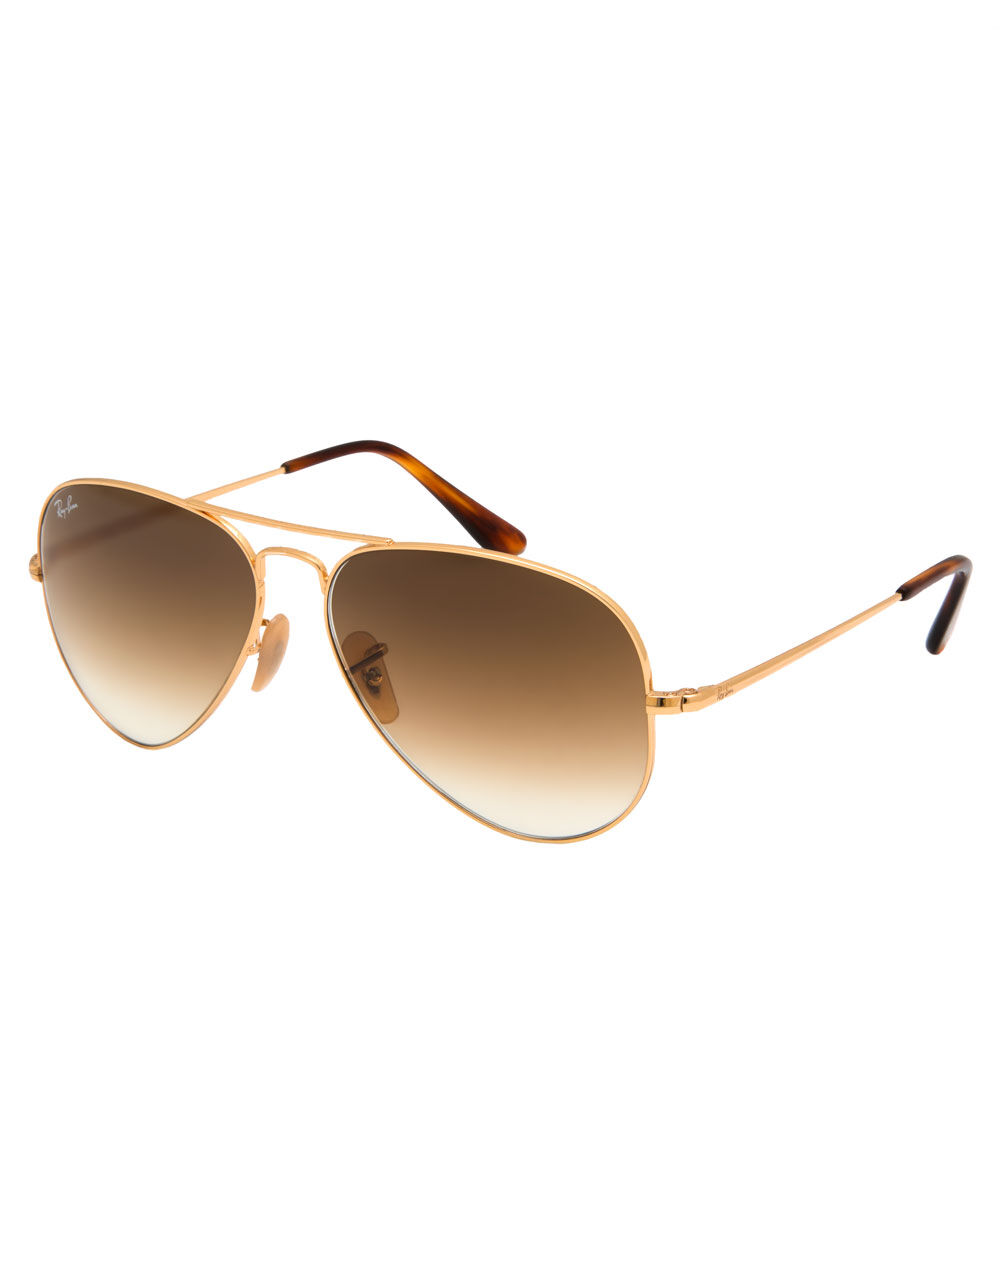 RAY-BAN RB3689 Aviator Gold & Light Brown Gradient Sunglasses